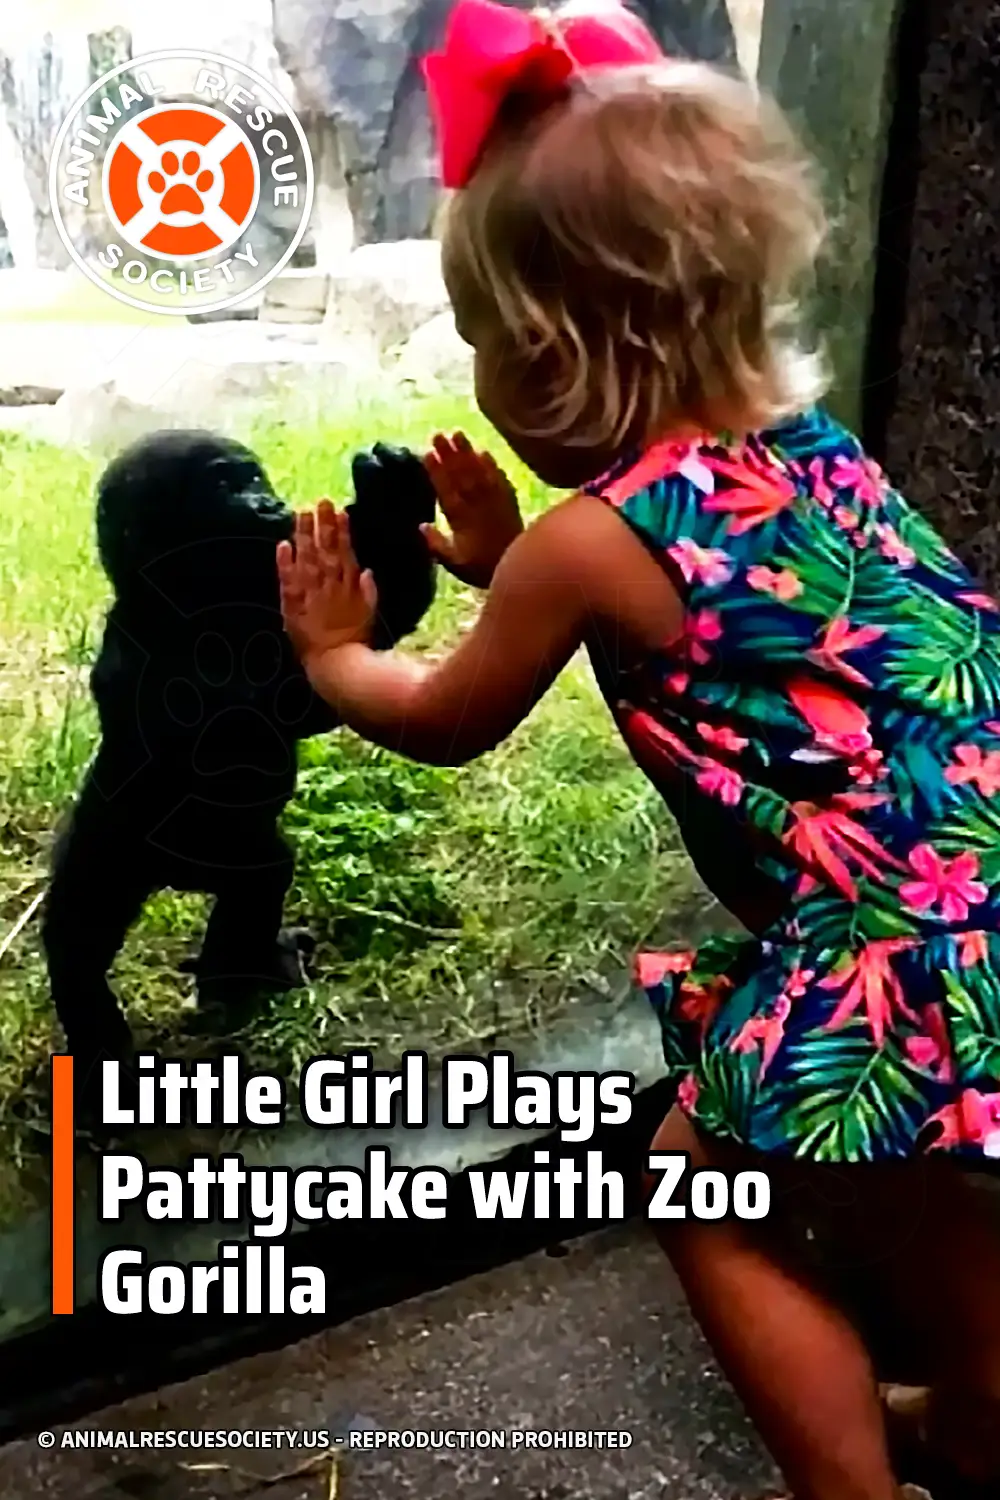 Little Girl Plays Pattycake with Zoo Gorilla